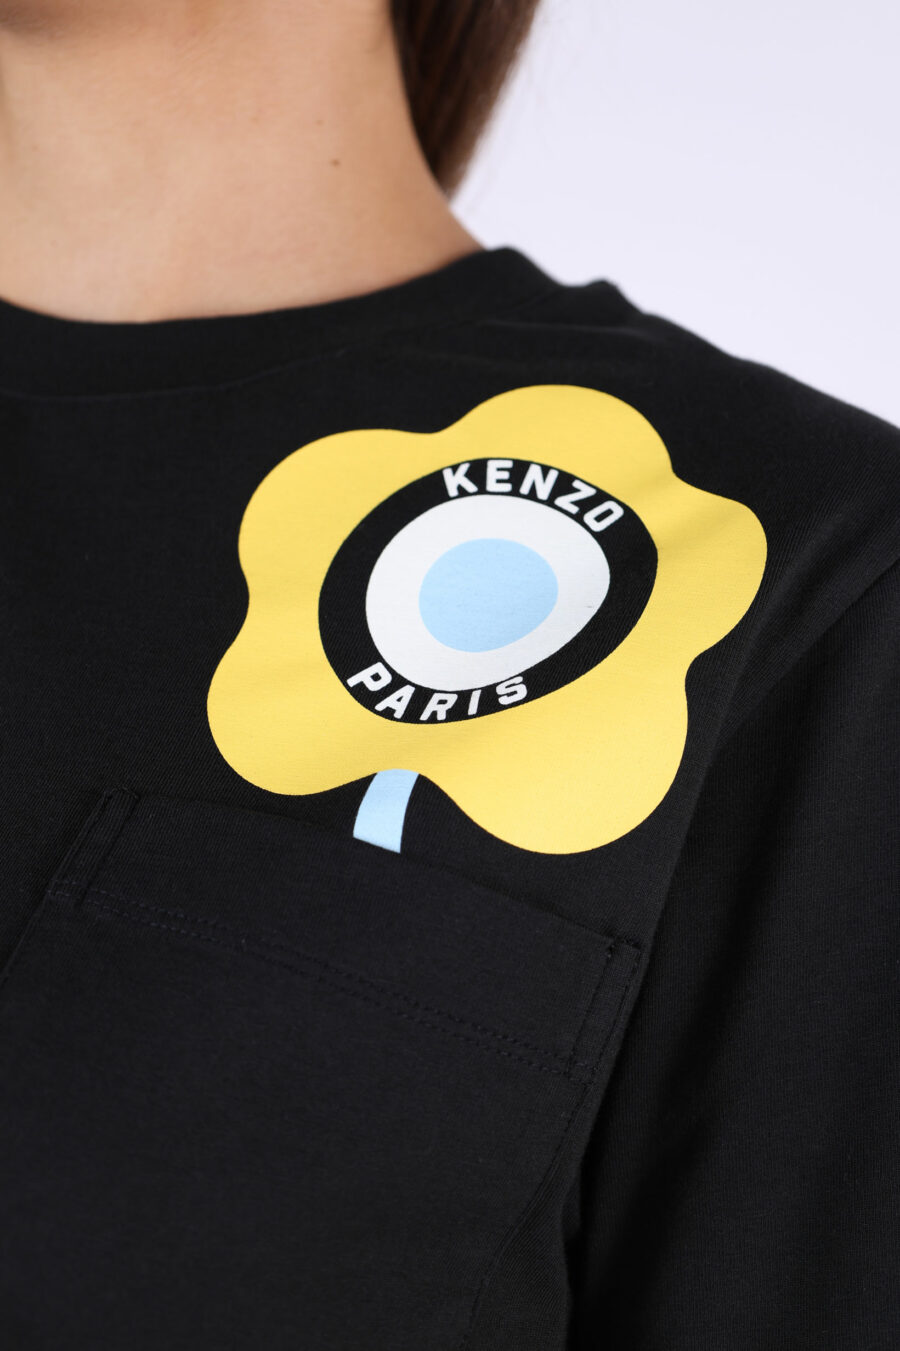 T-shirt noir avec logo jaune "kenzo target" - 361223054662202016